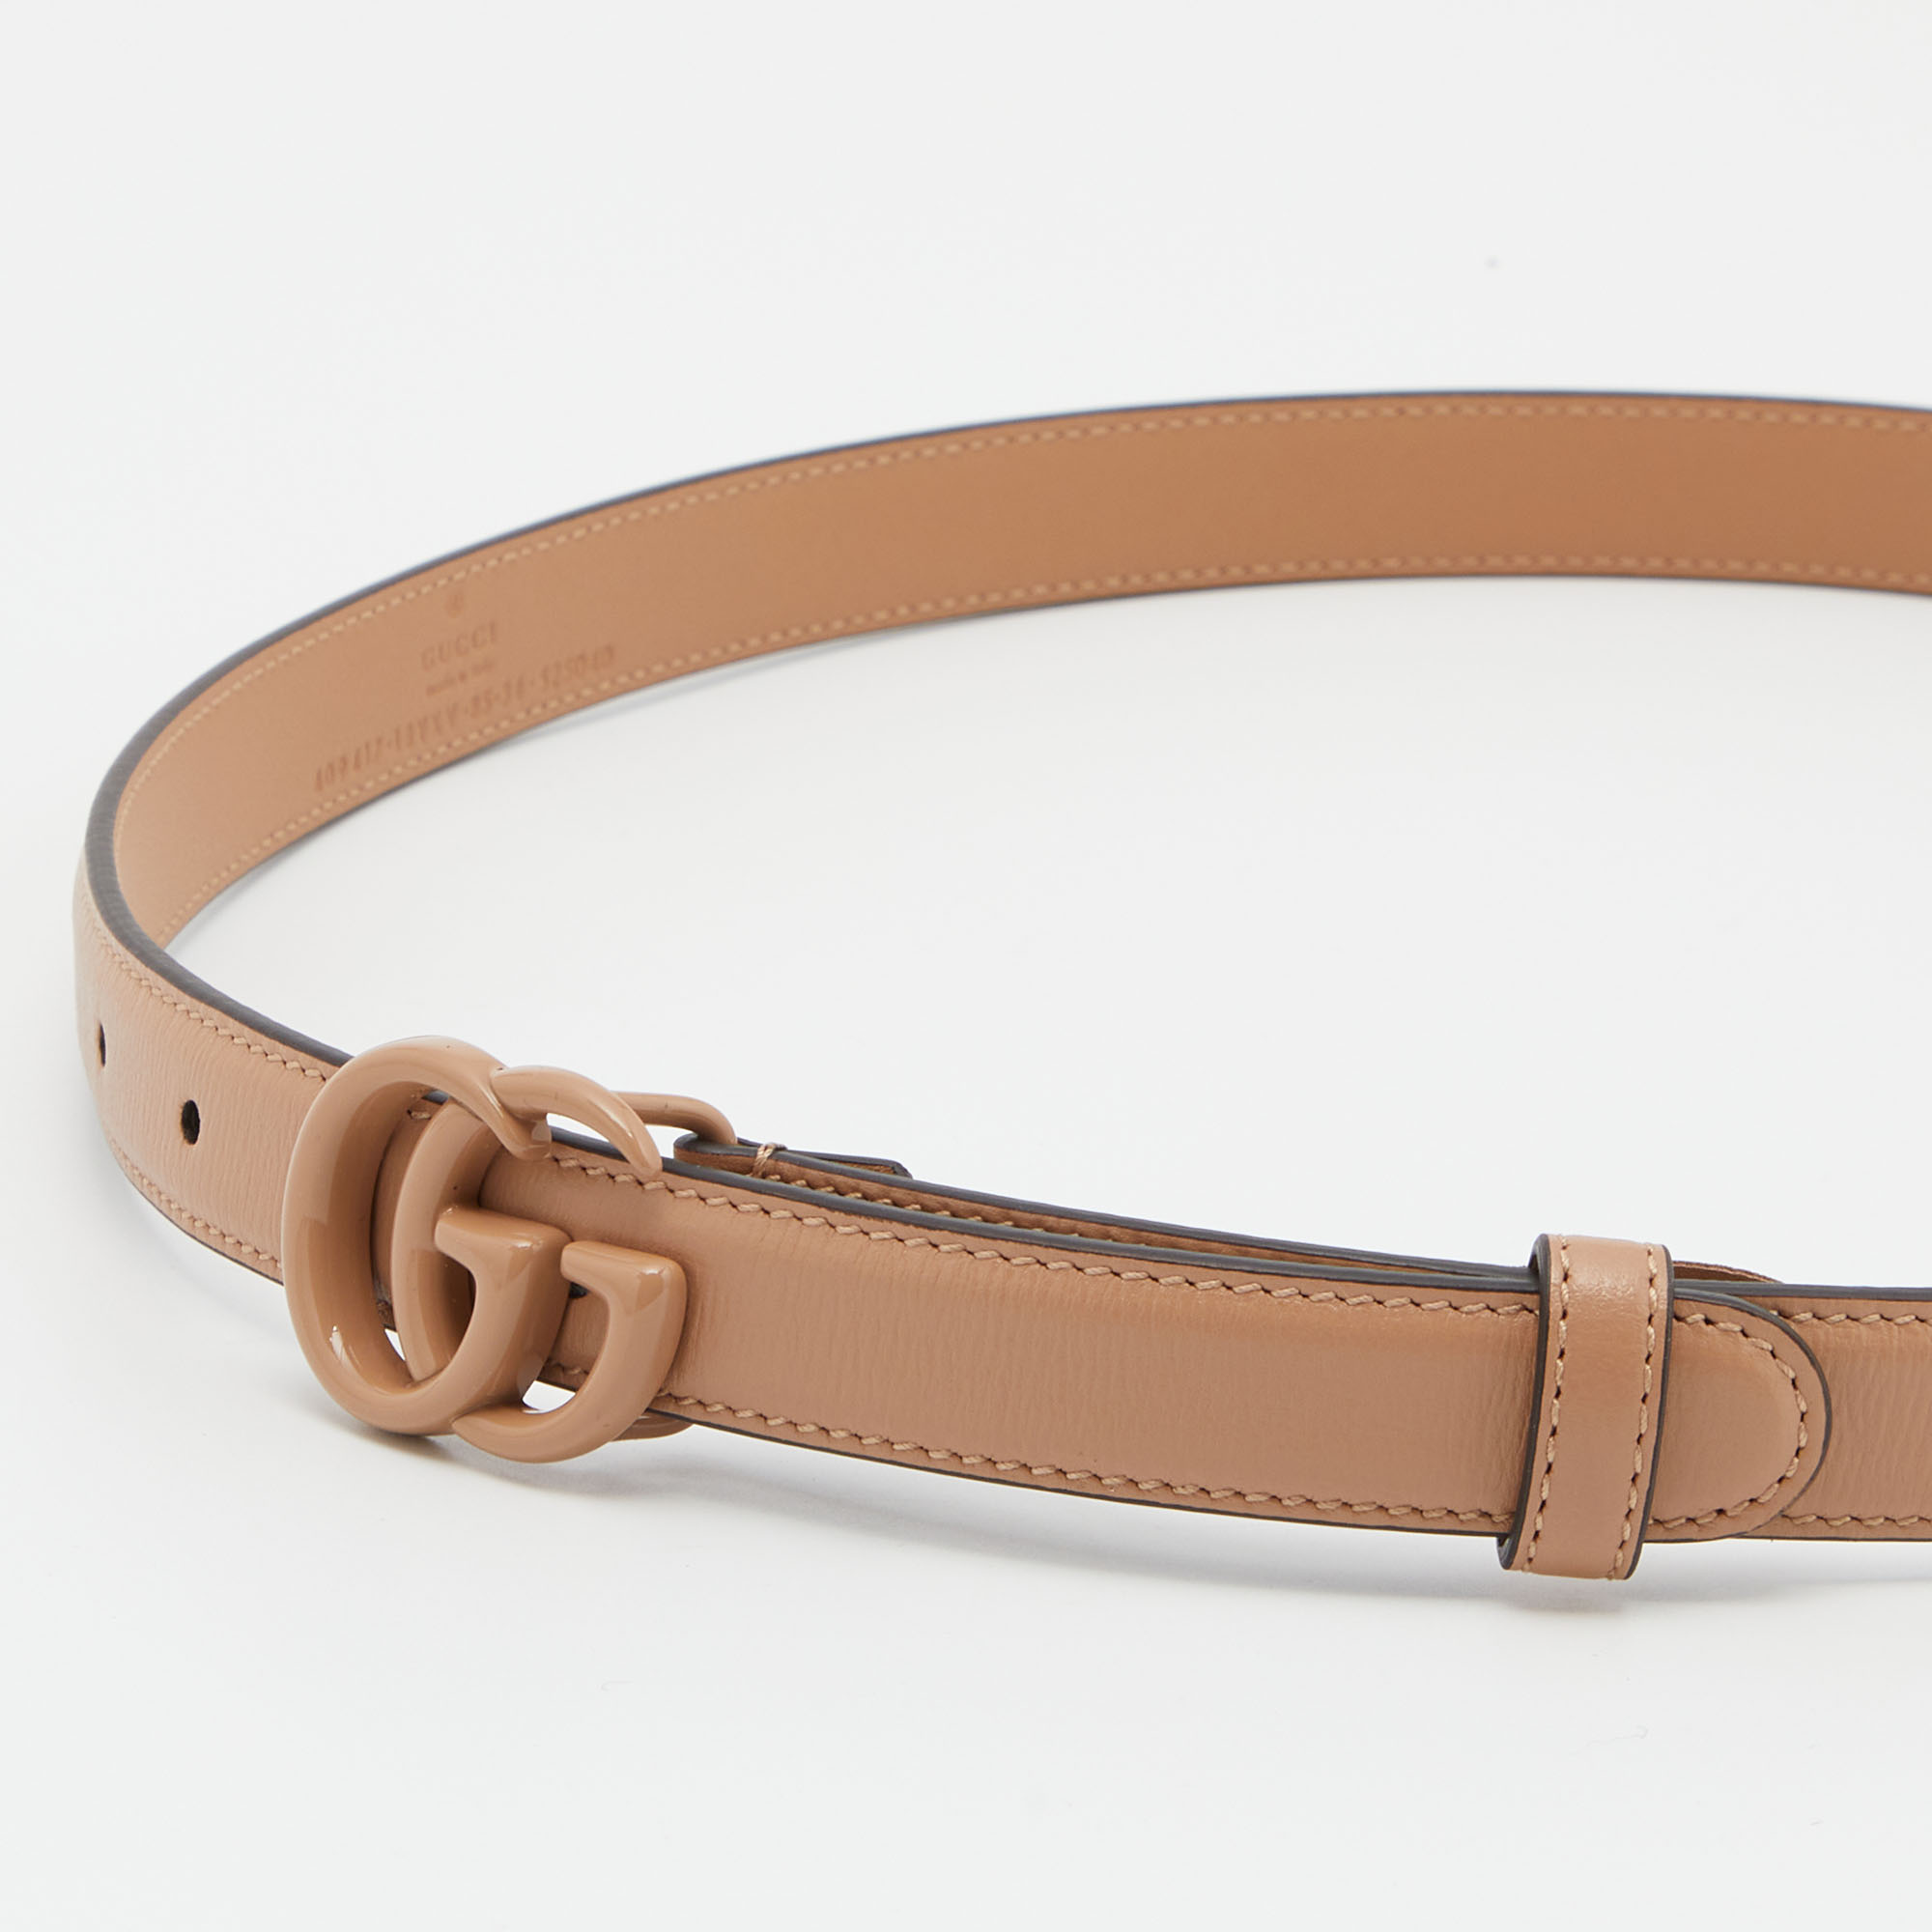 

Gucci Beige Leather GG Marmont Buckle Slim Belt